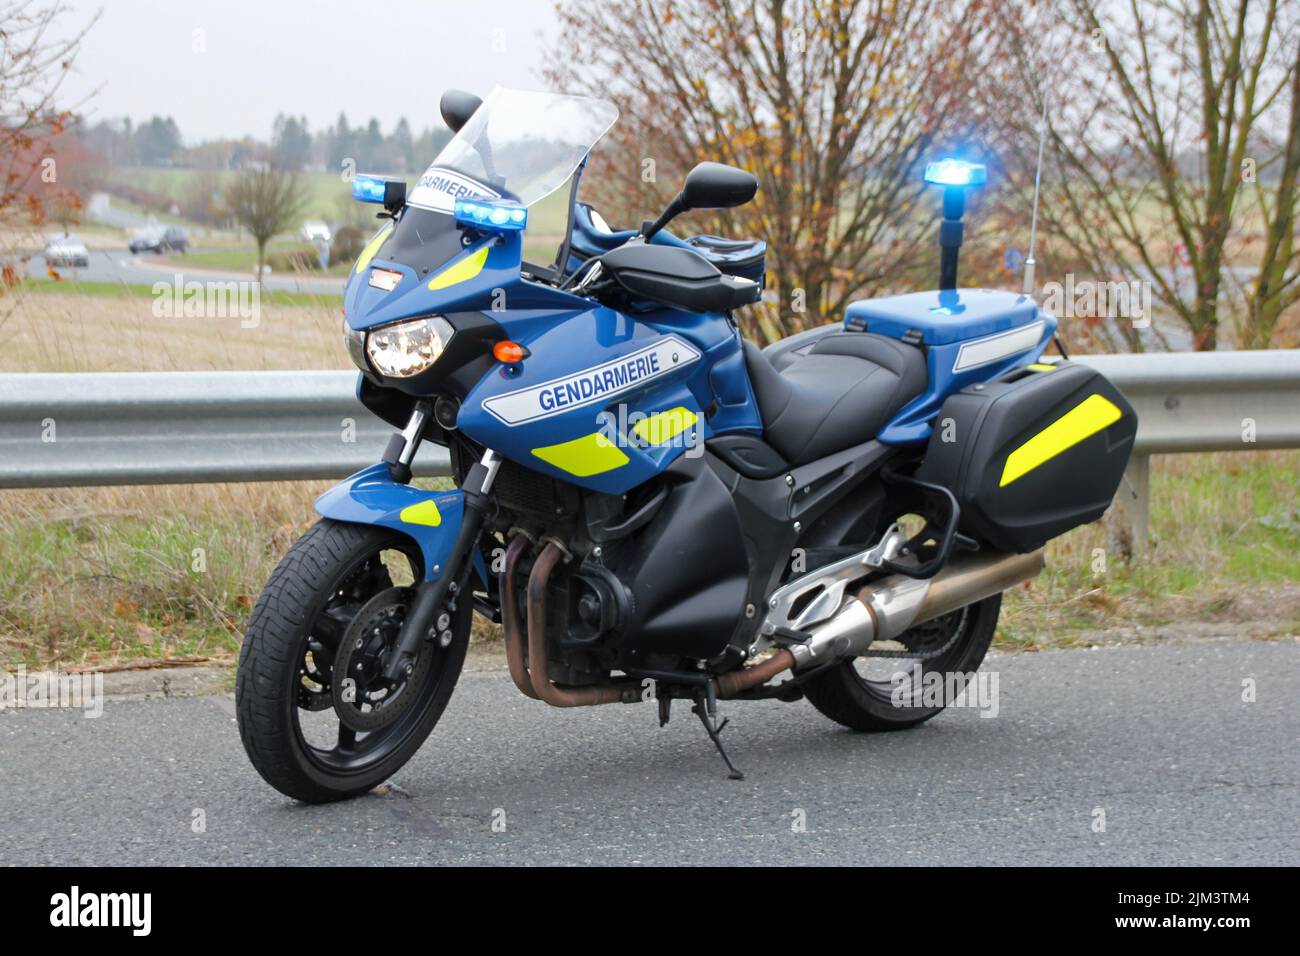 Moto gendarmerie Stock Photo